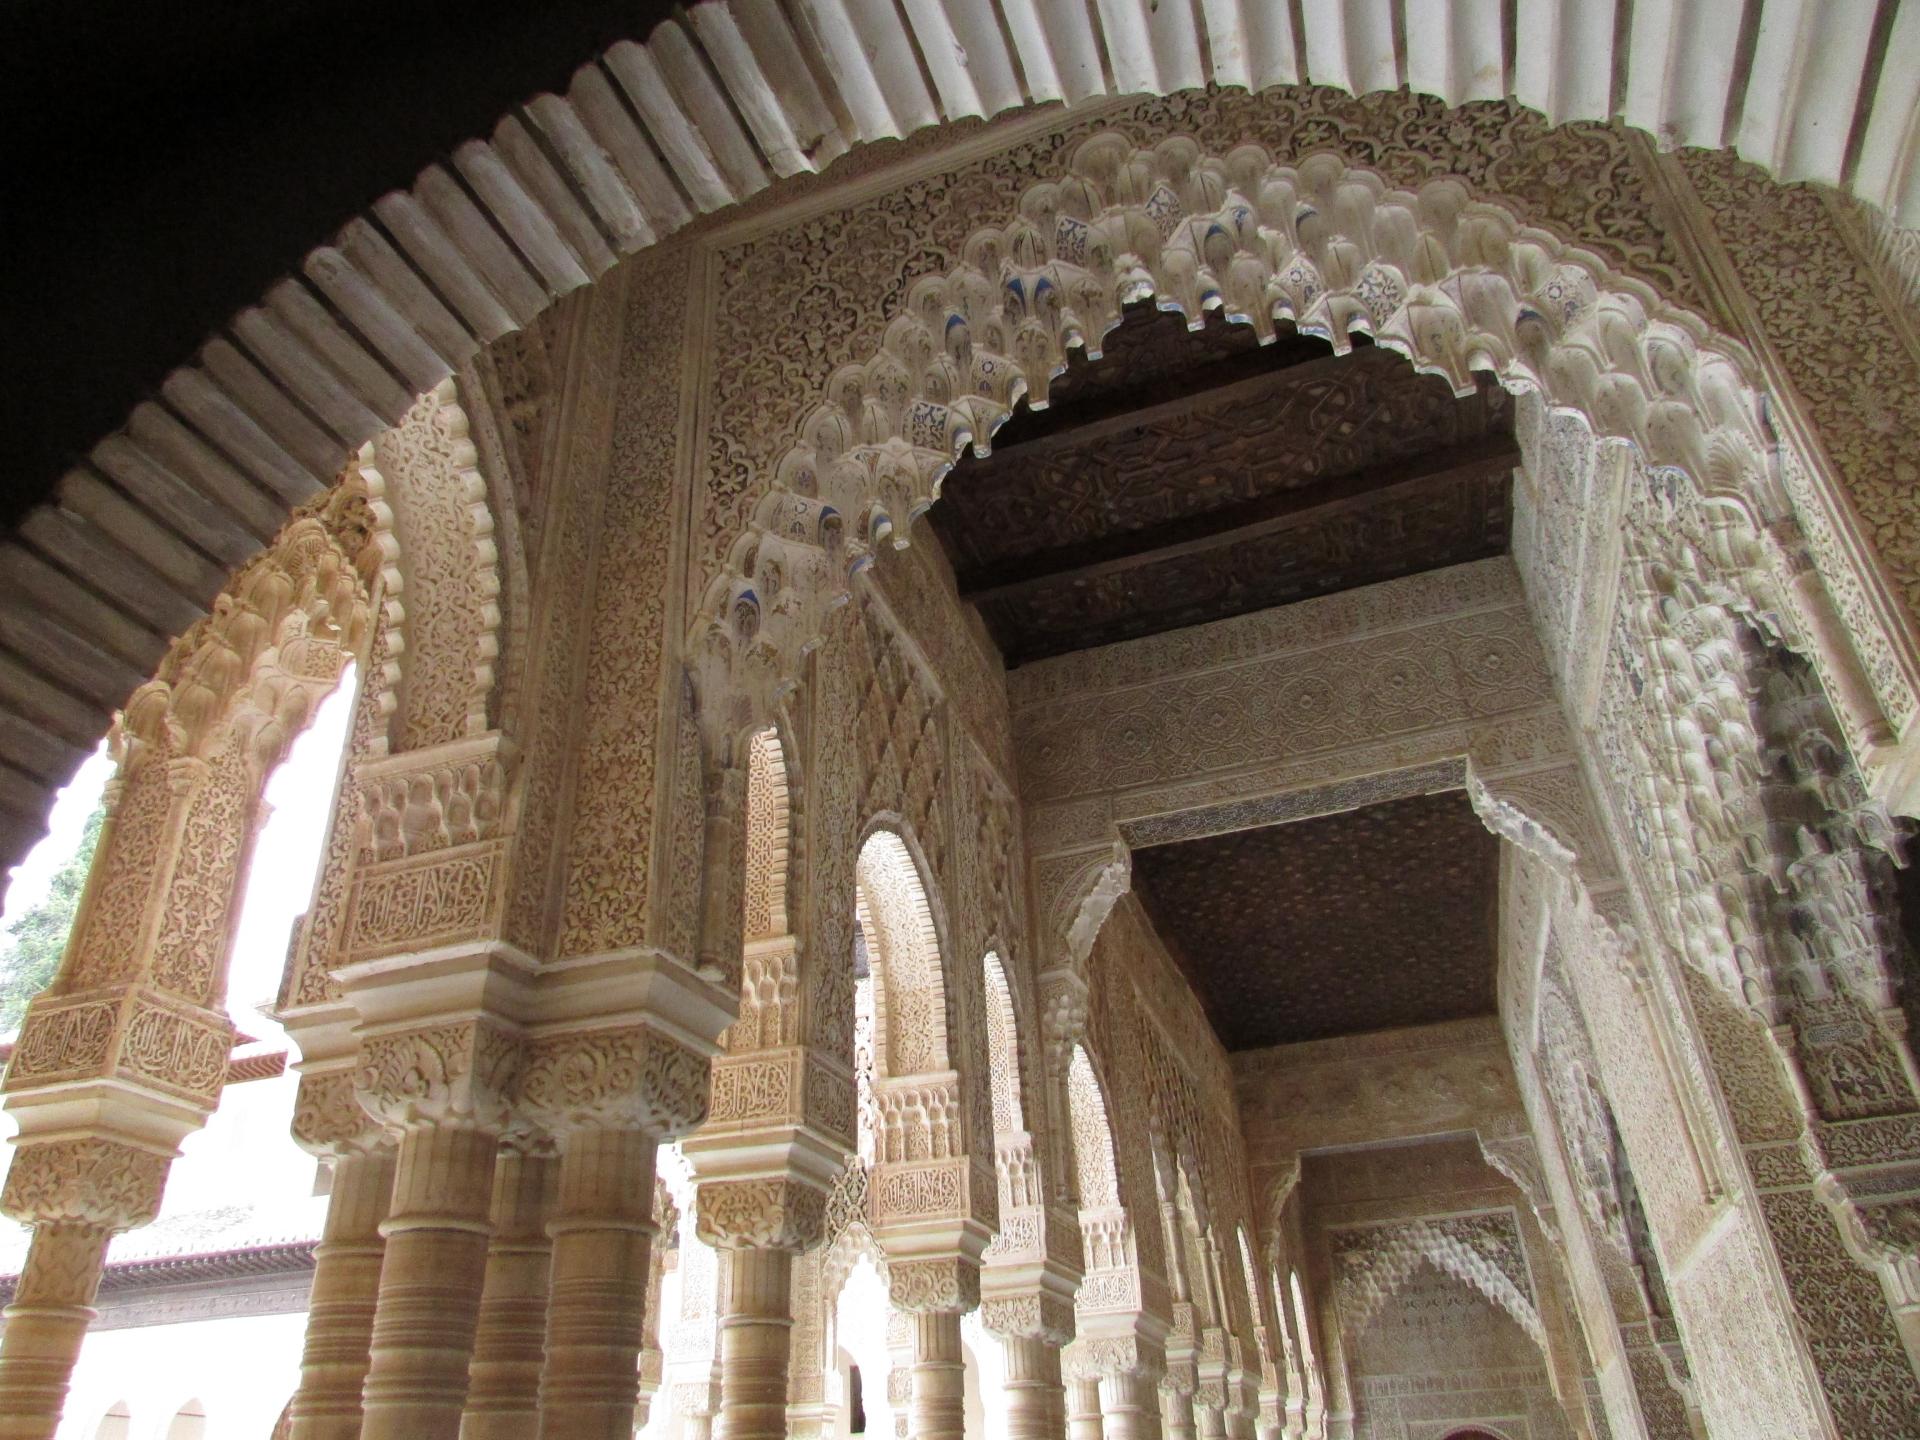 The hall of the muqarnas